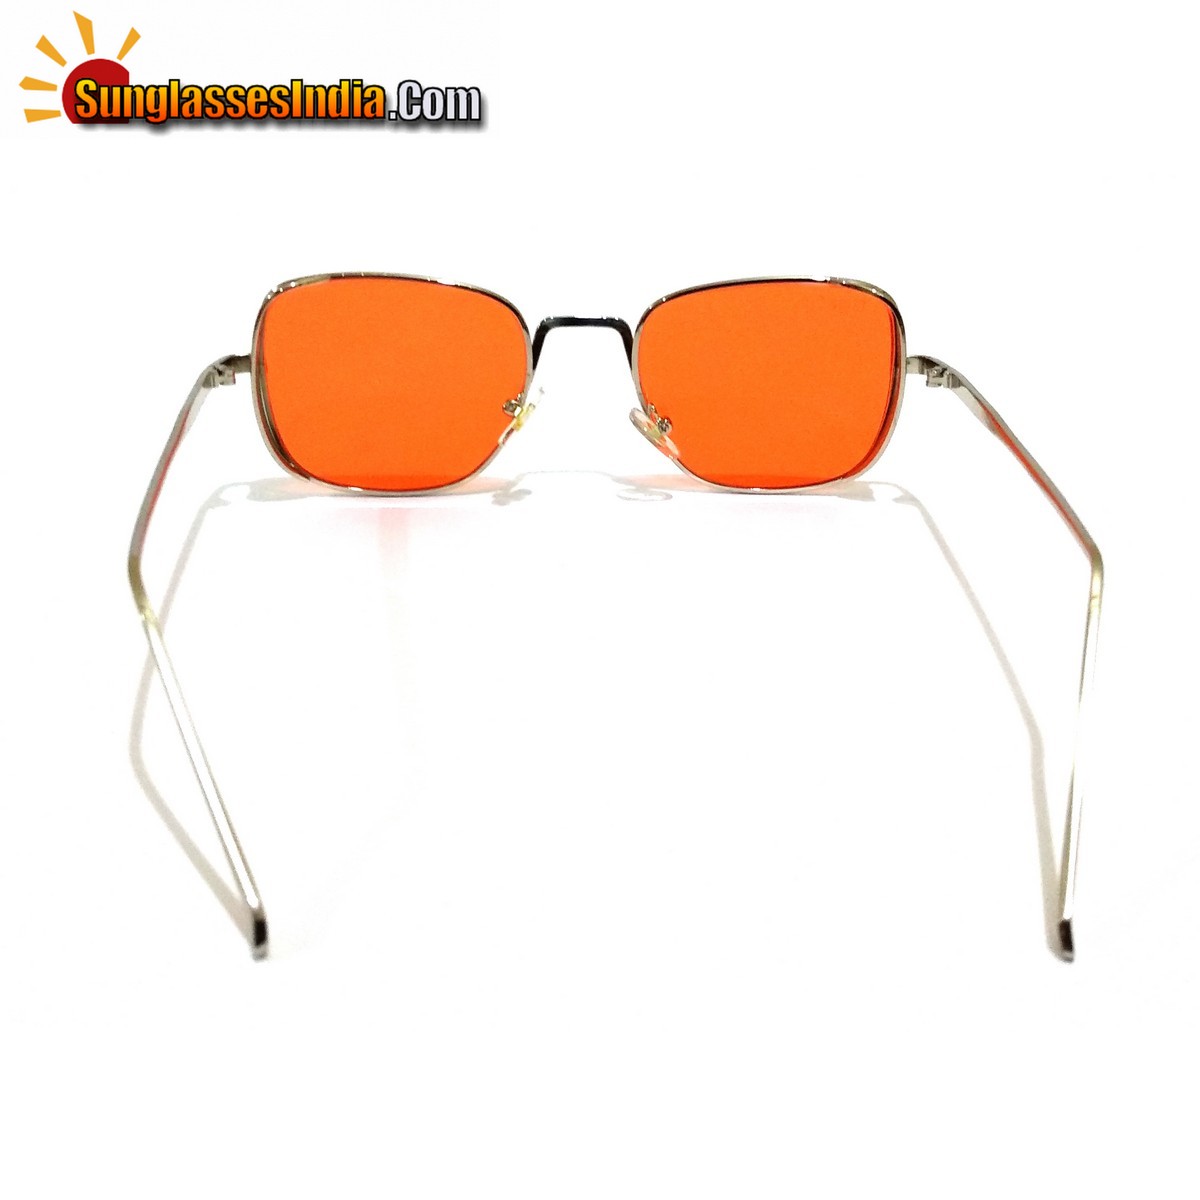 Kabir Singh Sunglasses Trendy Club Sunglasses Tik Tok Video Goggles Sunglasses